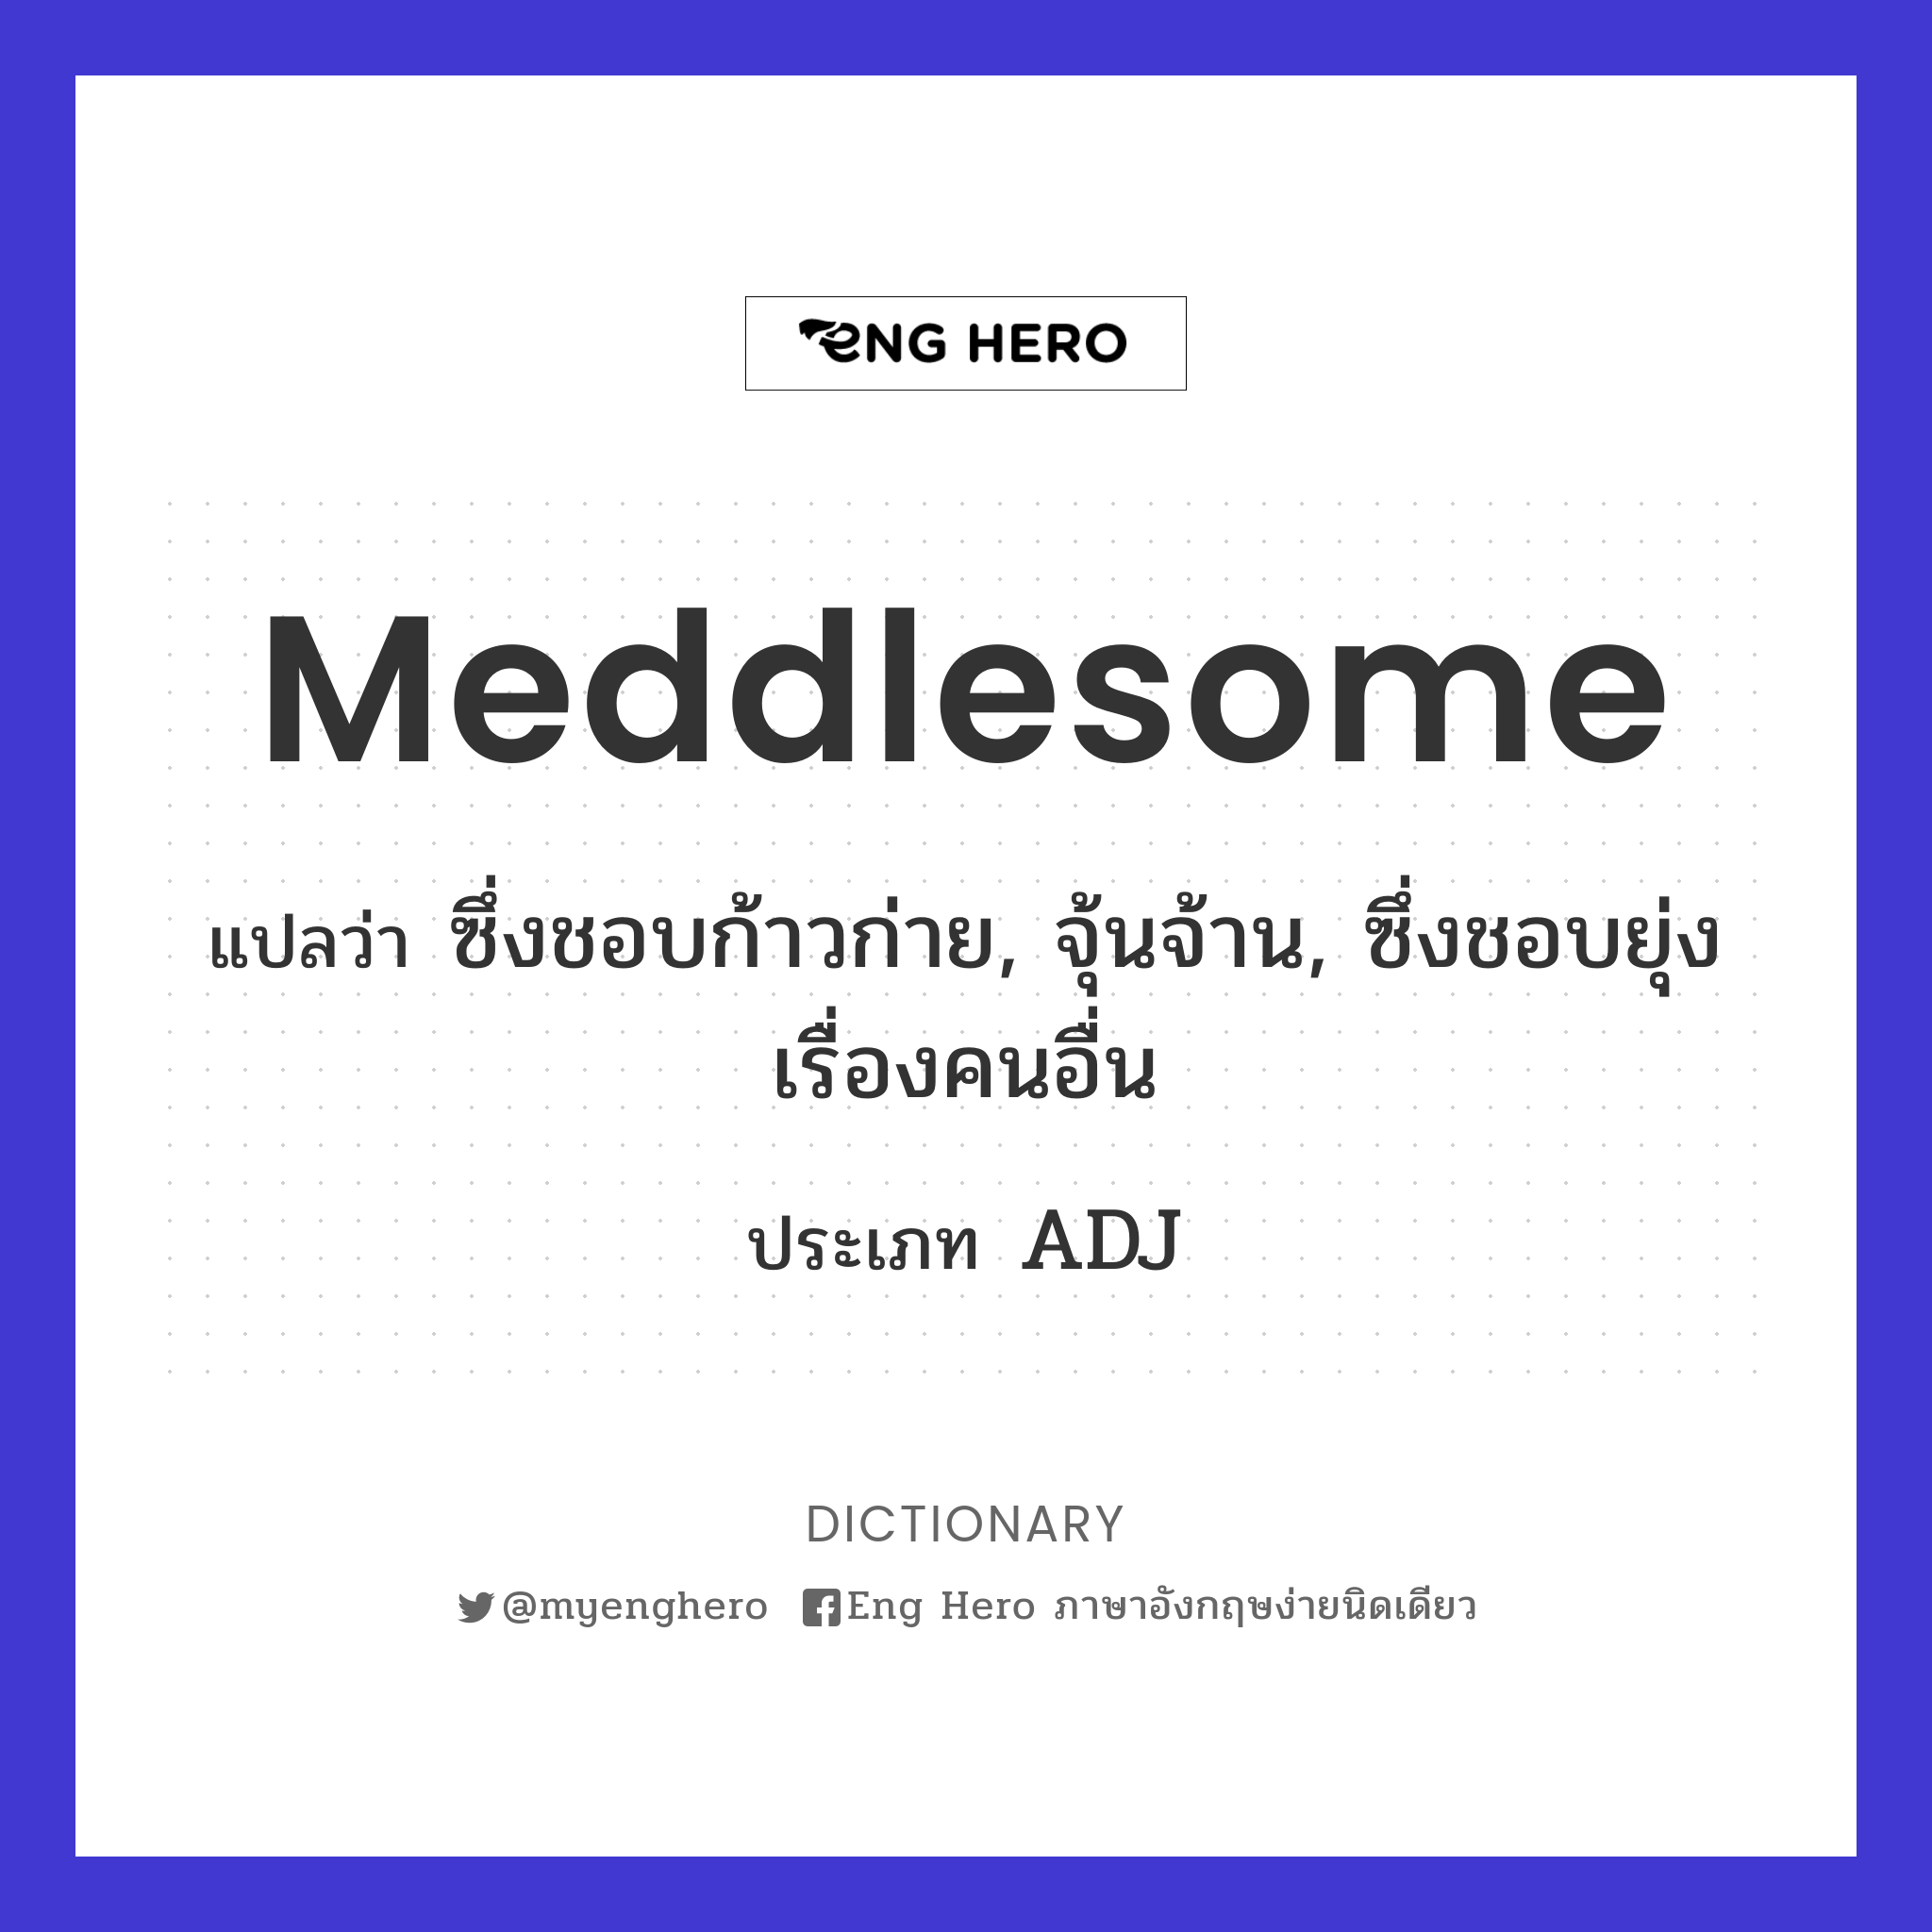 meddlesome